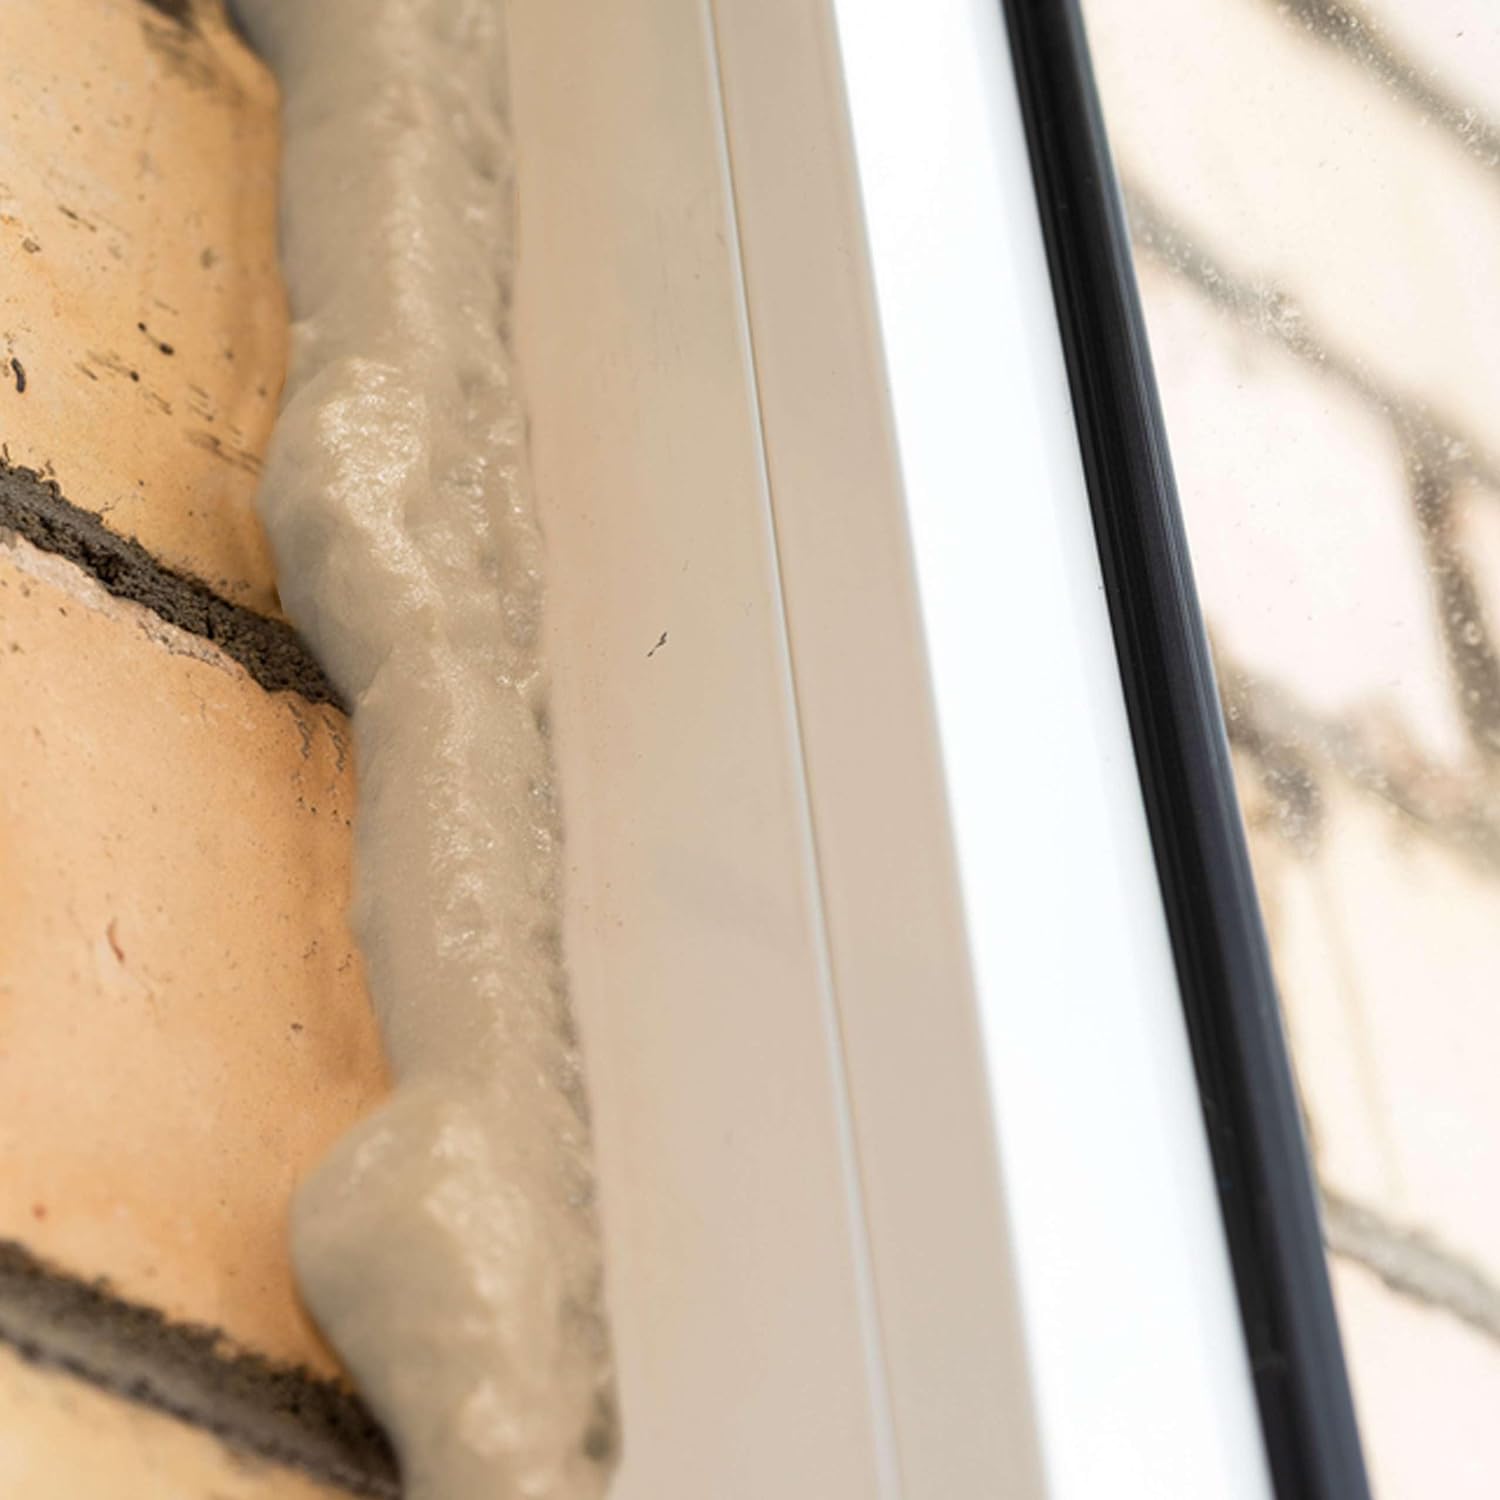 Krakenbond Window & Door Gap Filler, Insulating Foam Sealant, Straw Us